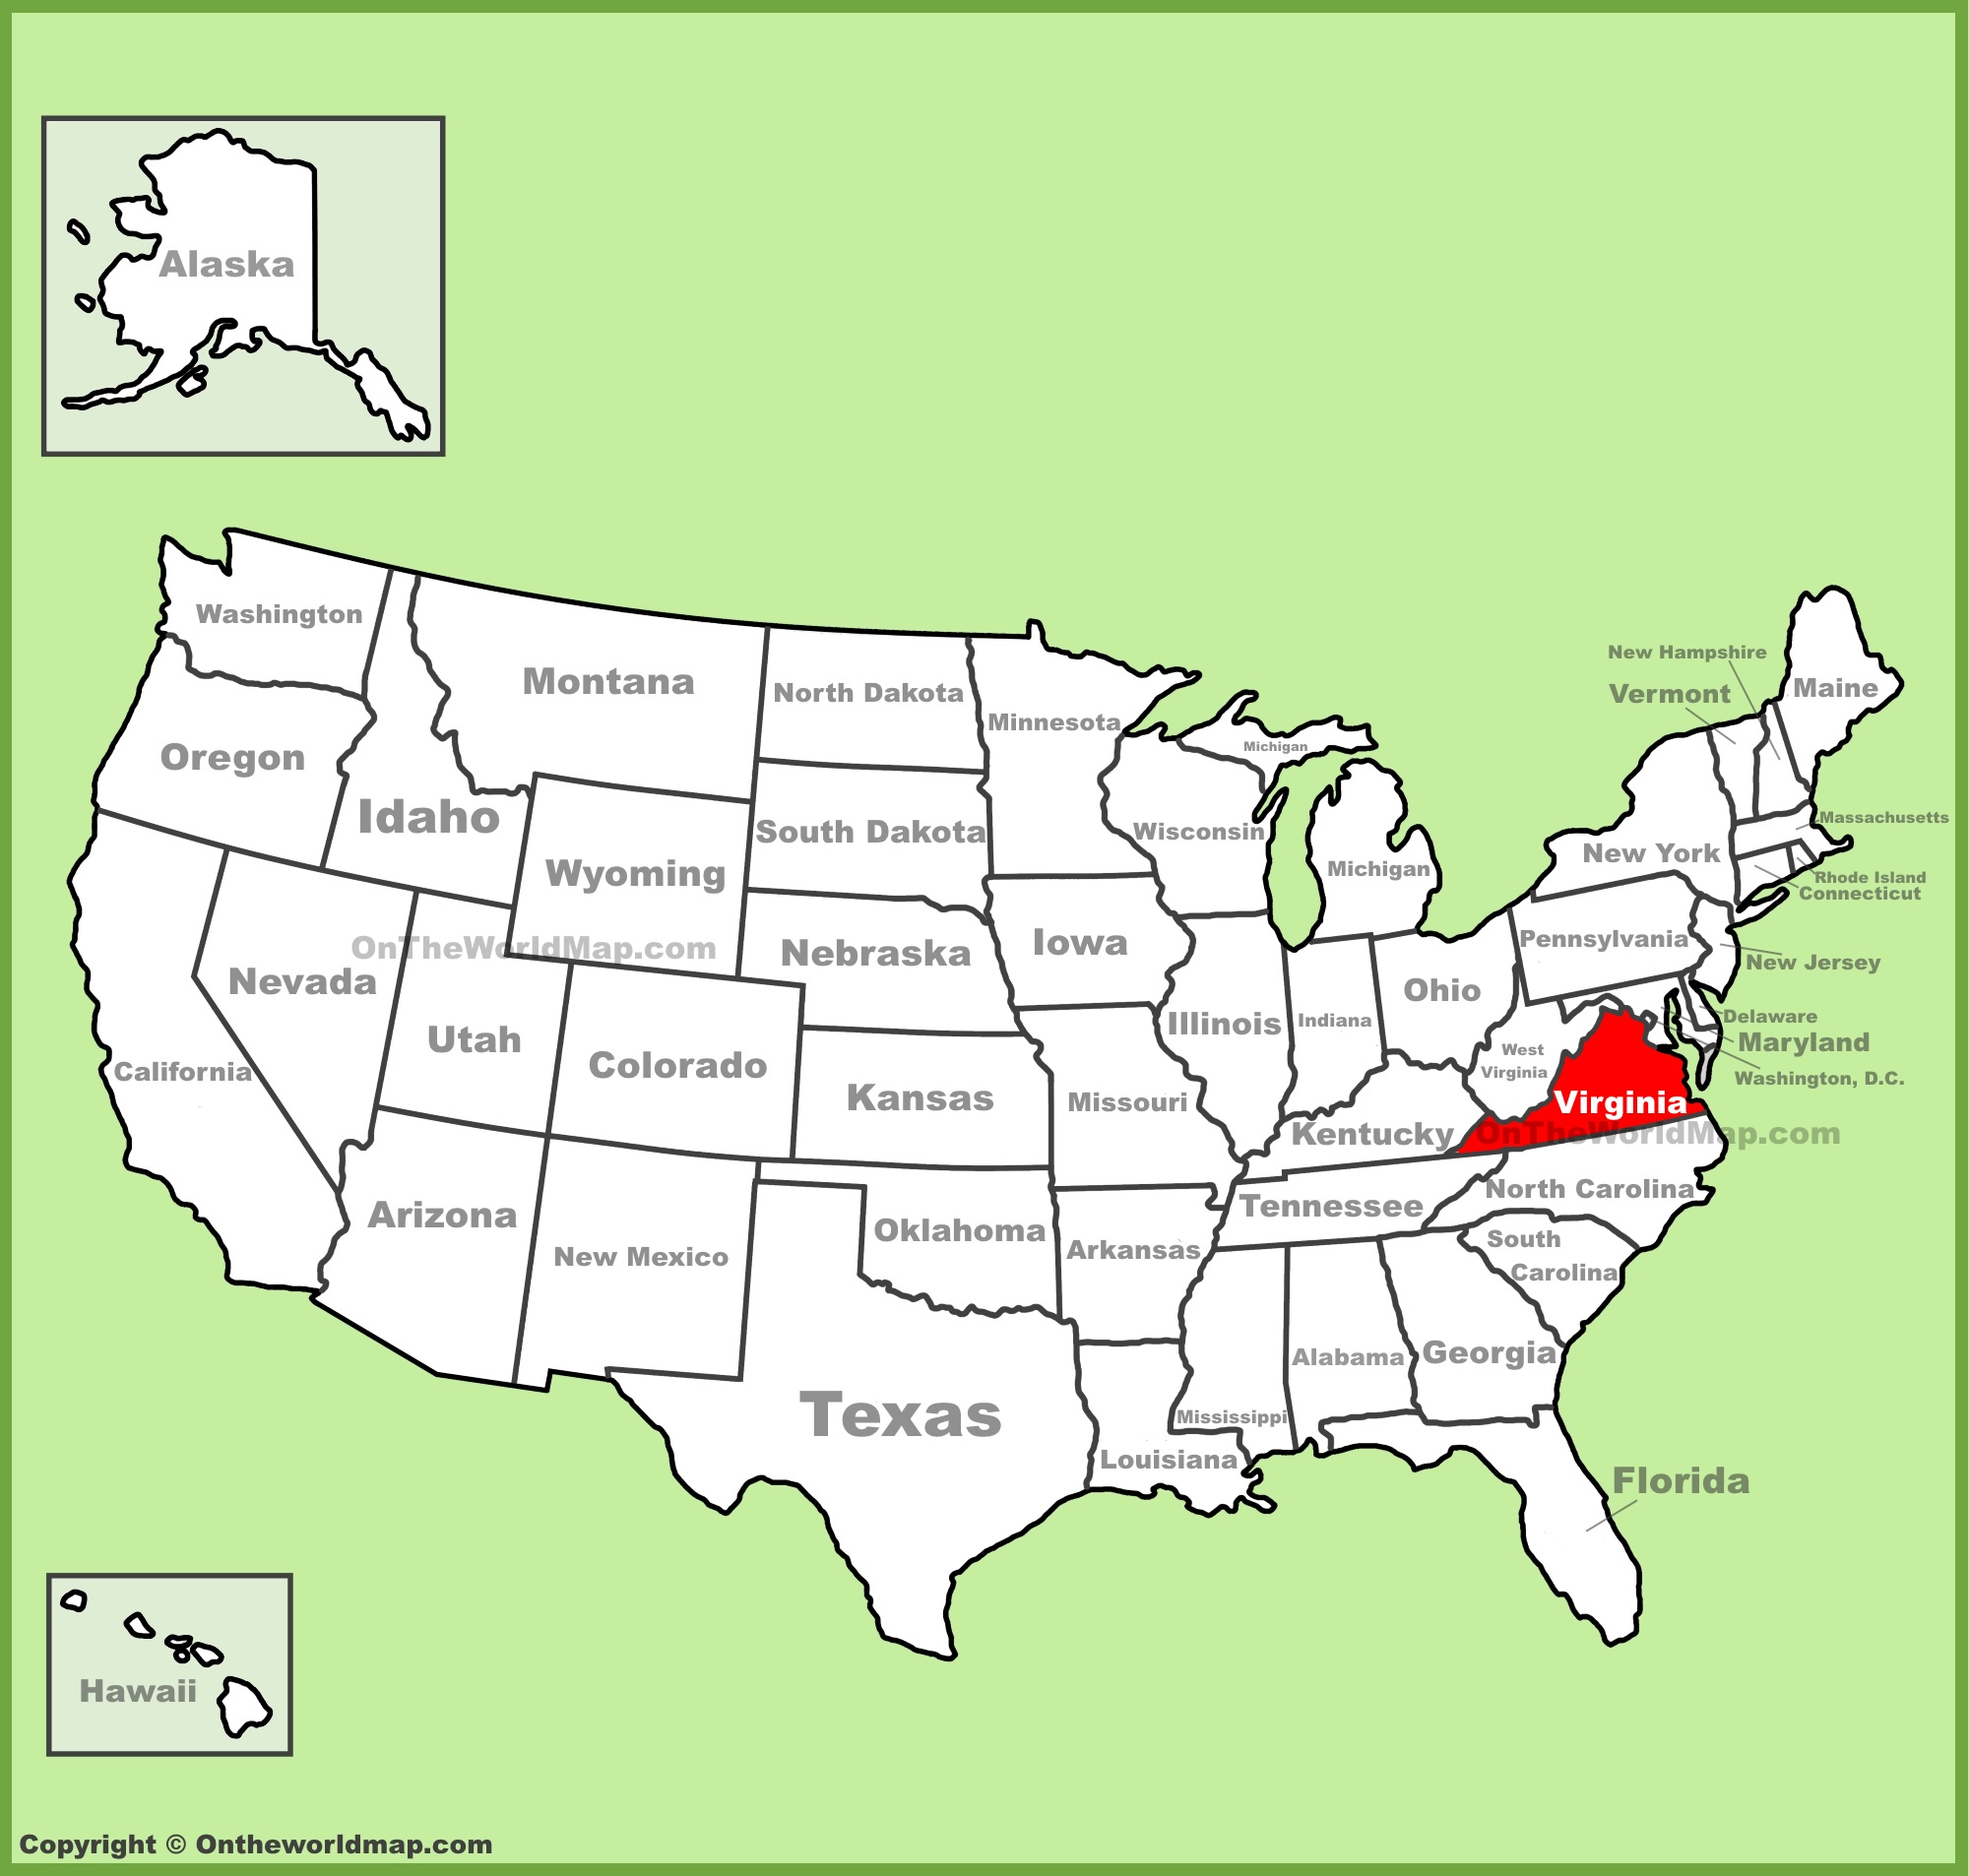 Virginia location on the U.S. Map